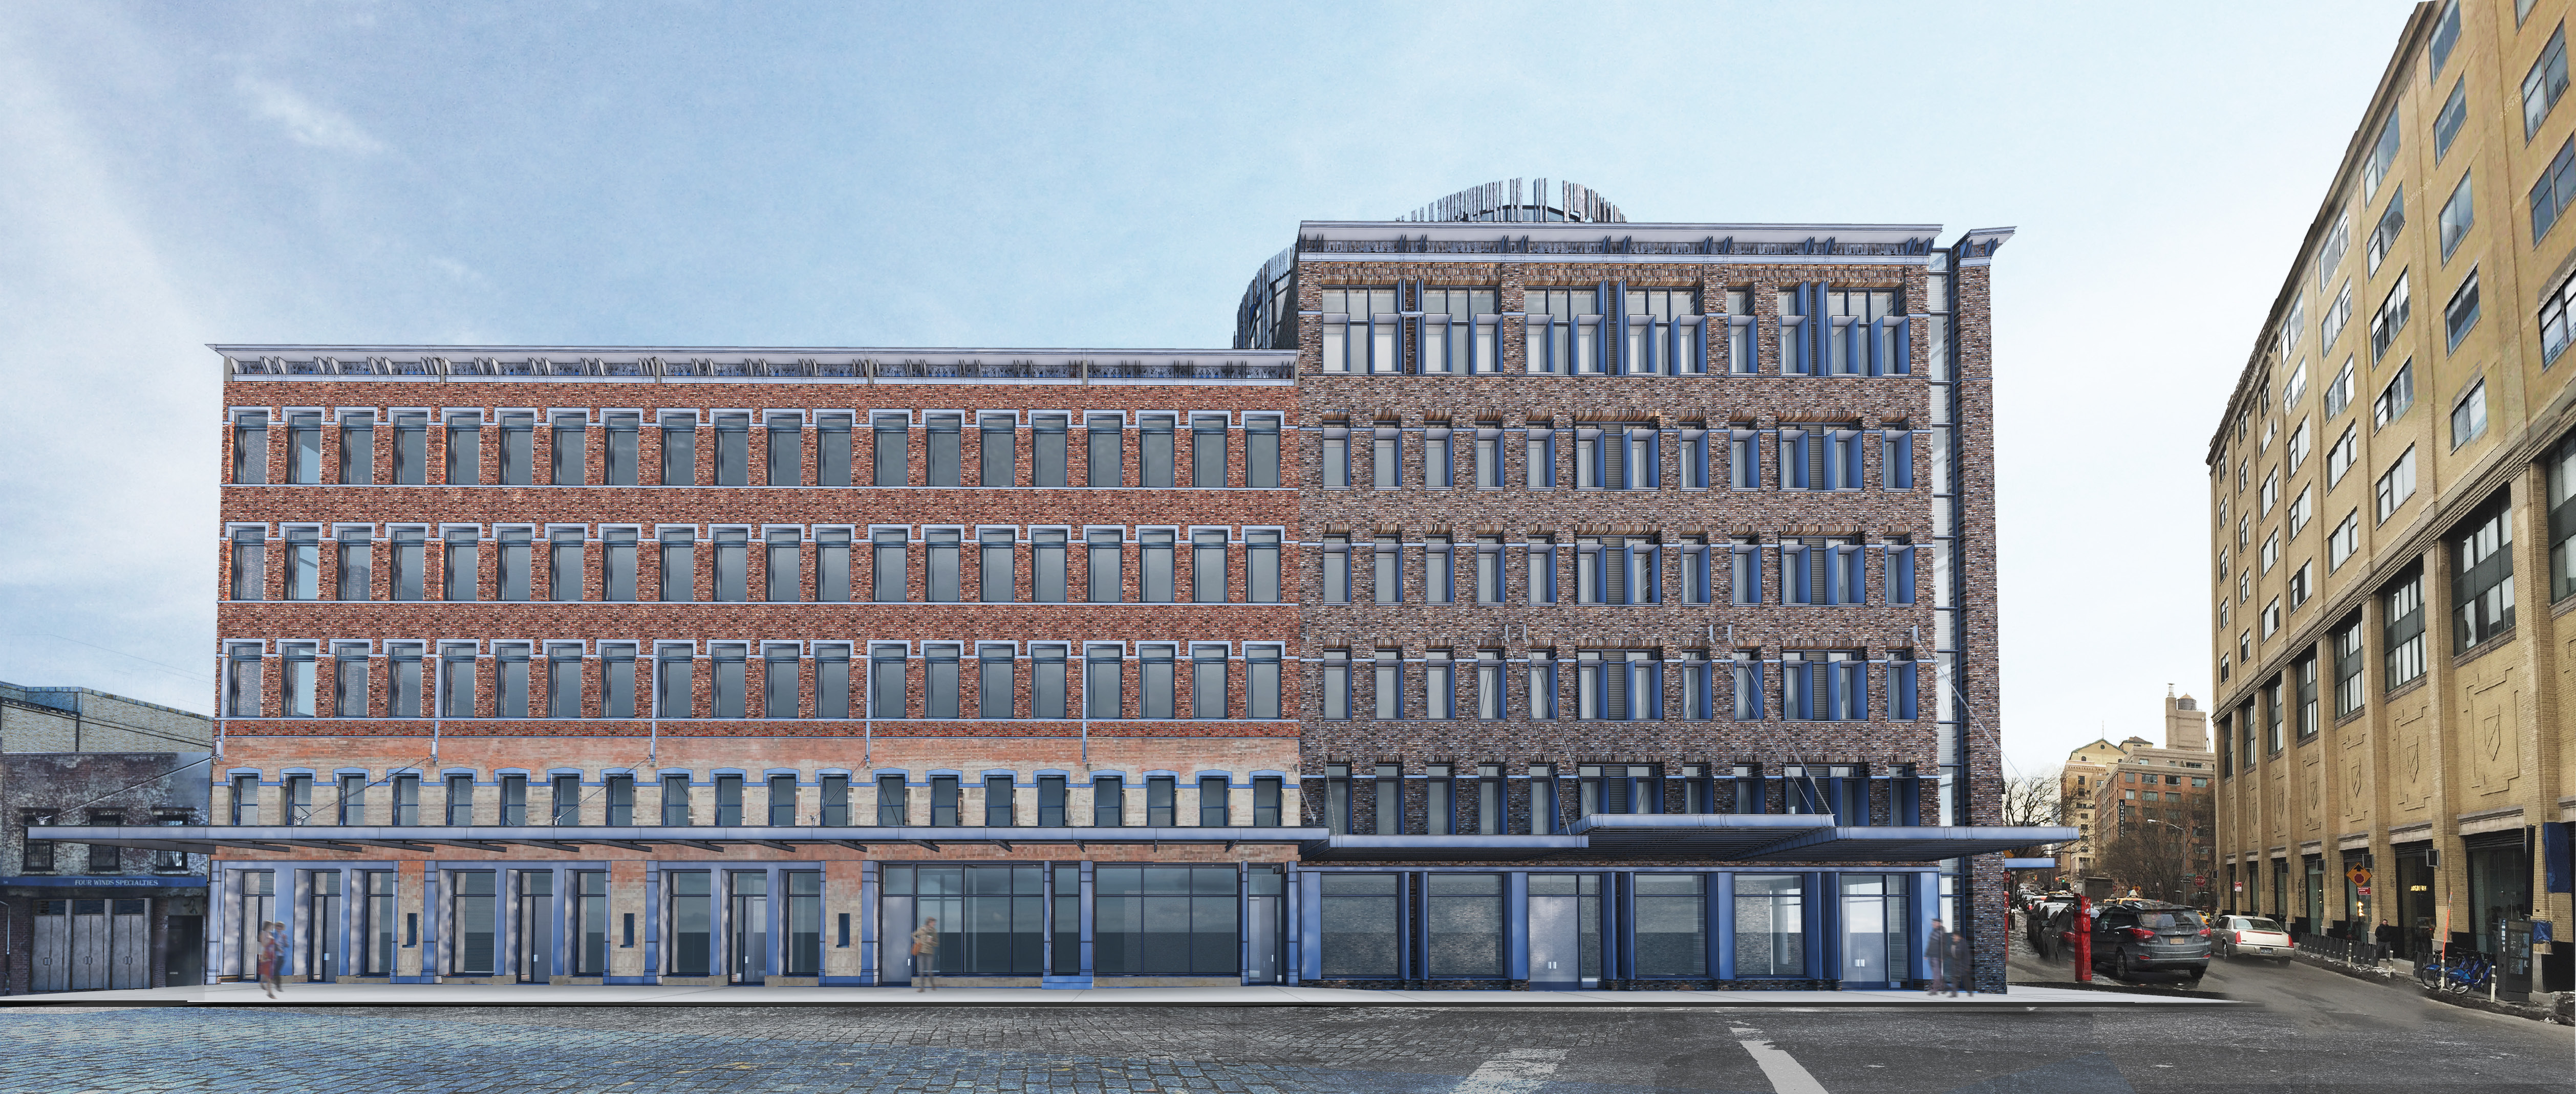 60-74 Gansevoort Street, rendering by BKSK Architects